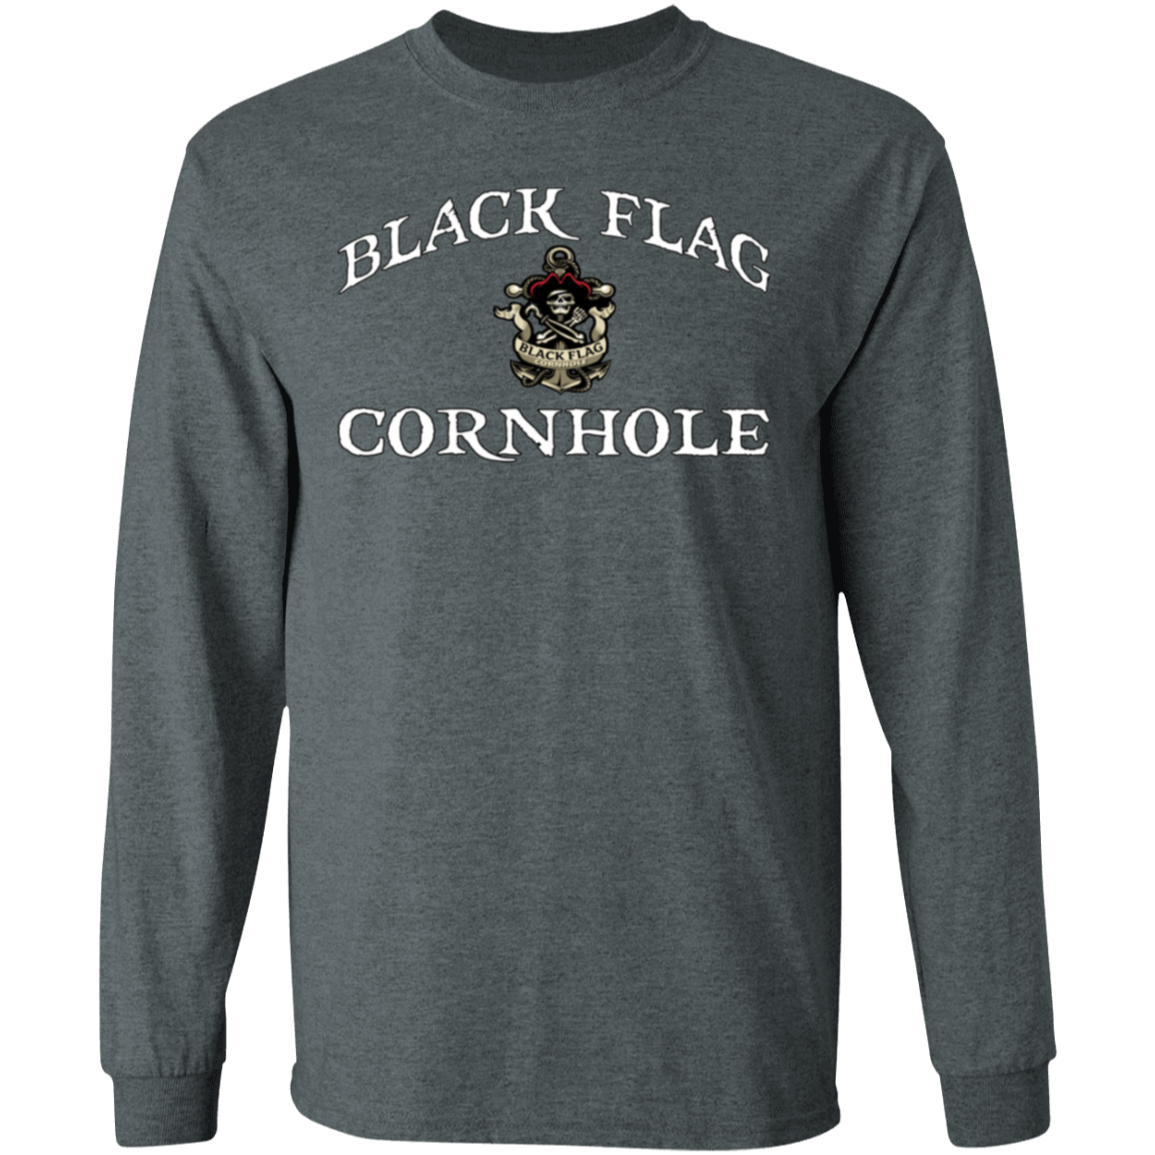 Black Flag Cornhole Long Sleeve T-Shirt